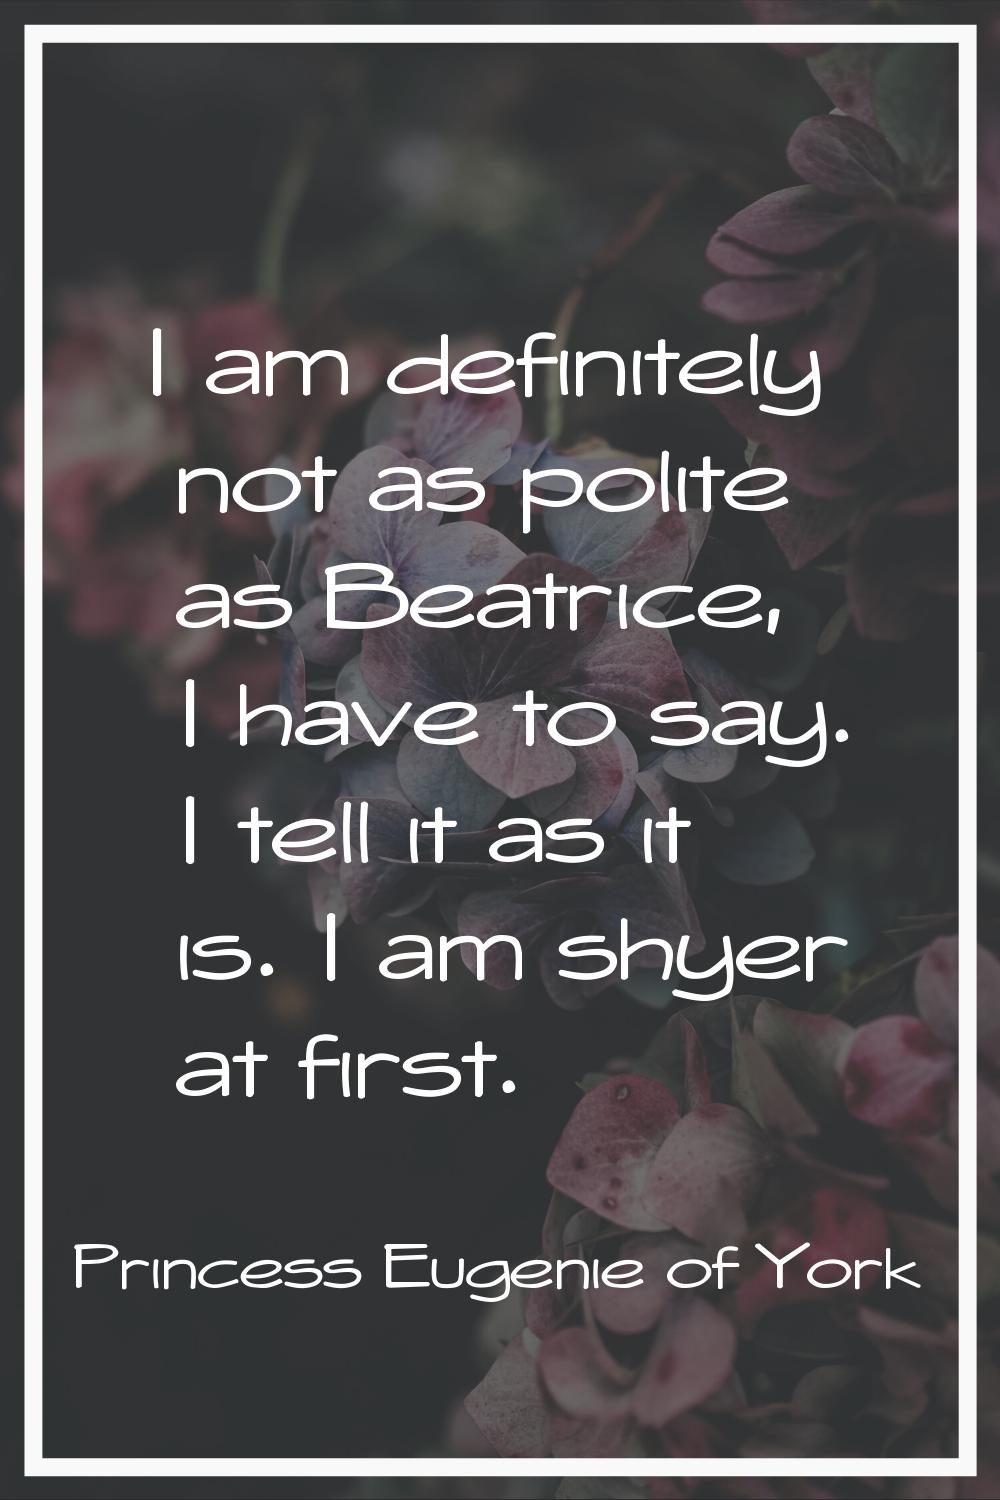 I am definitely not as polite as Beatrice, I have to say. I tell it as it is. I am shyer at first.